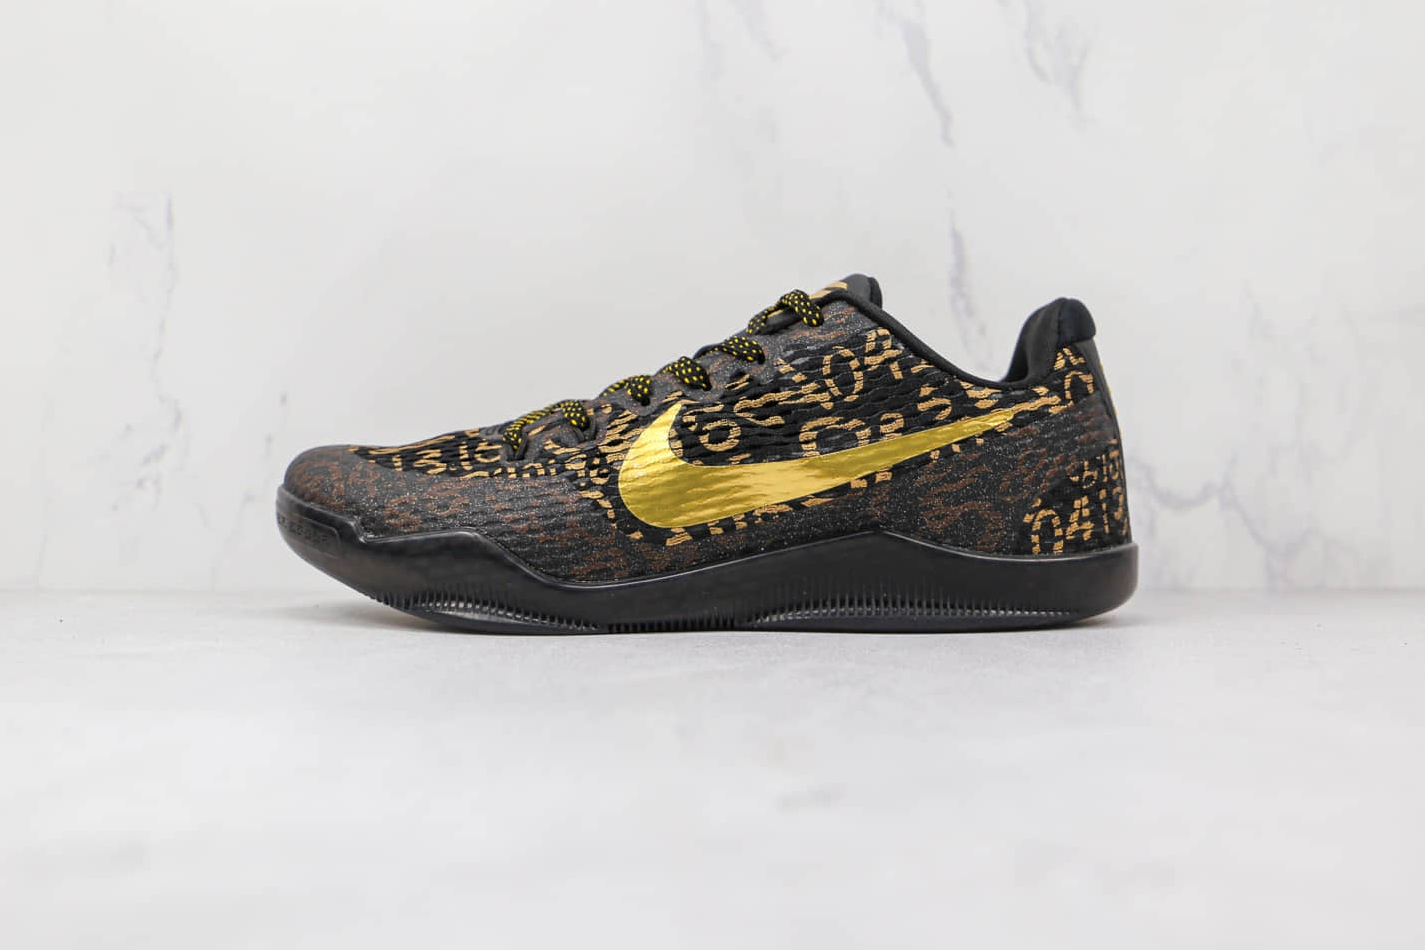 Nike Kobe 11 ID Mamba Day 865773-991 - Premium Kobe Basketball Shoes, Limited Edition